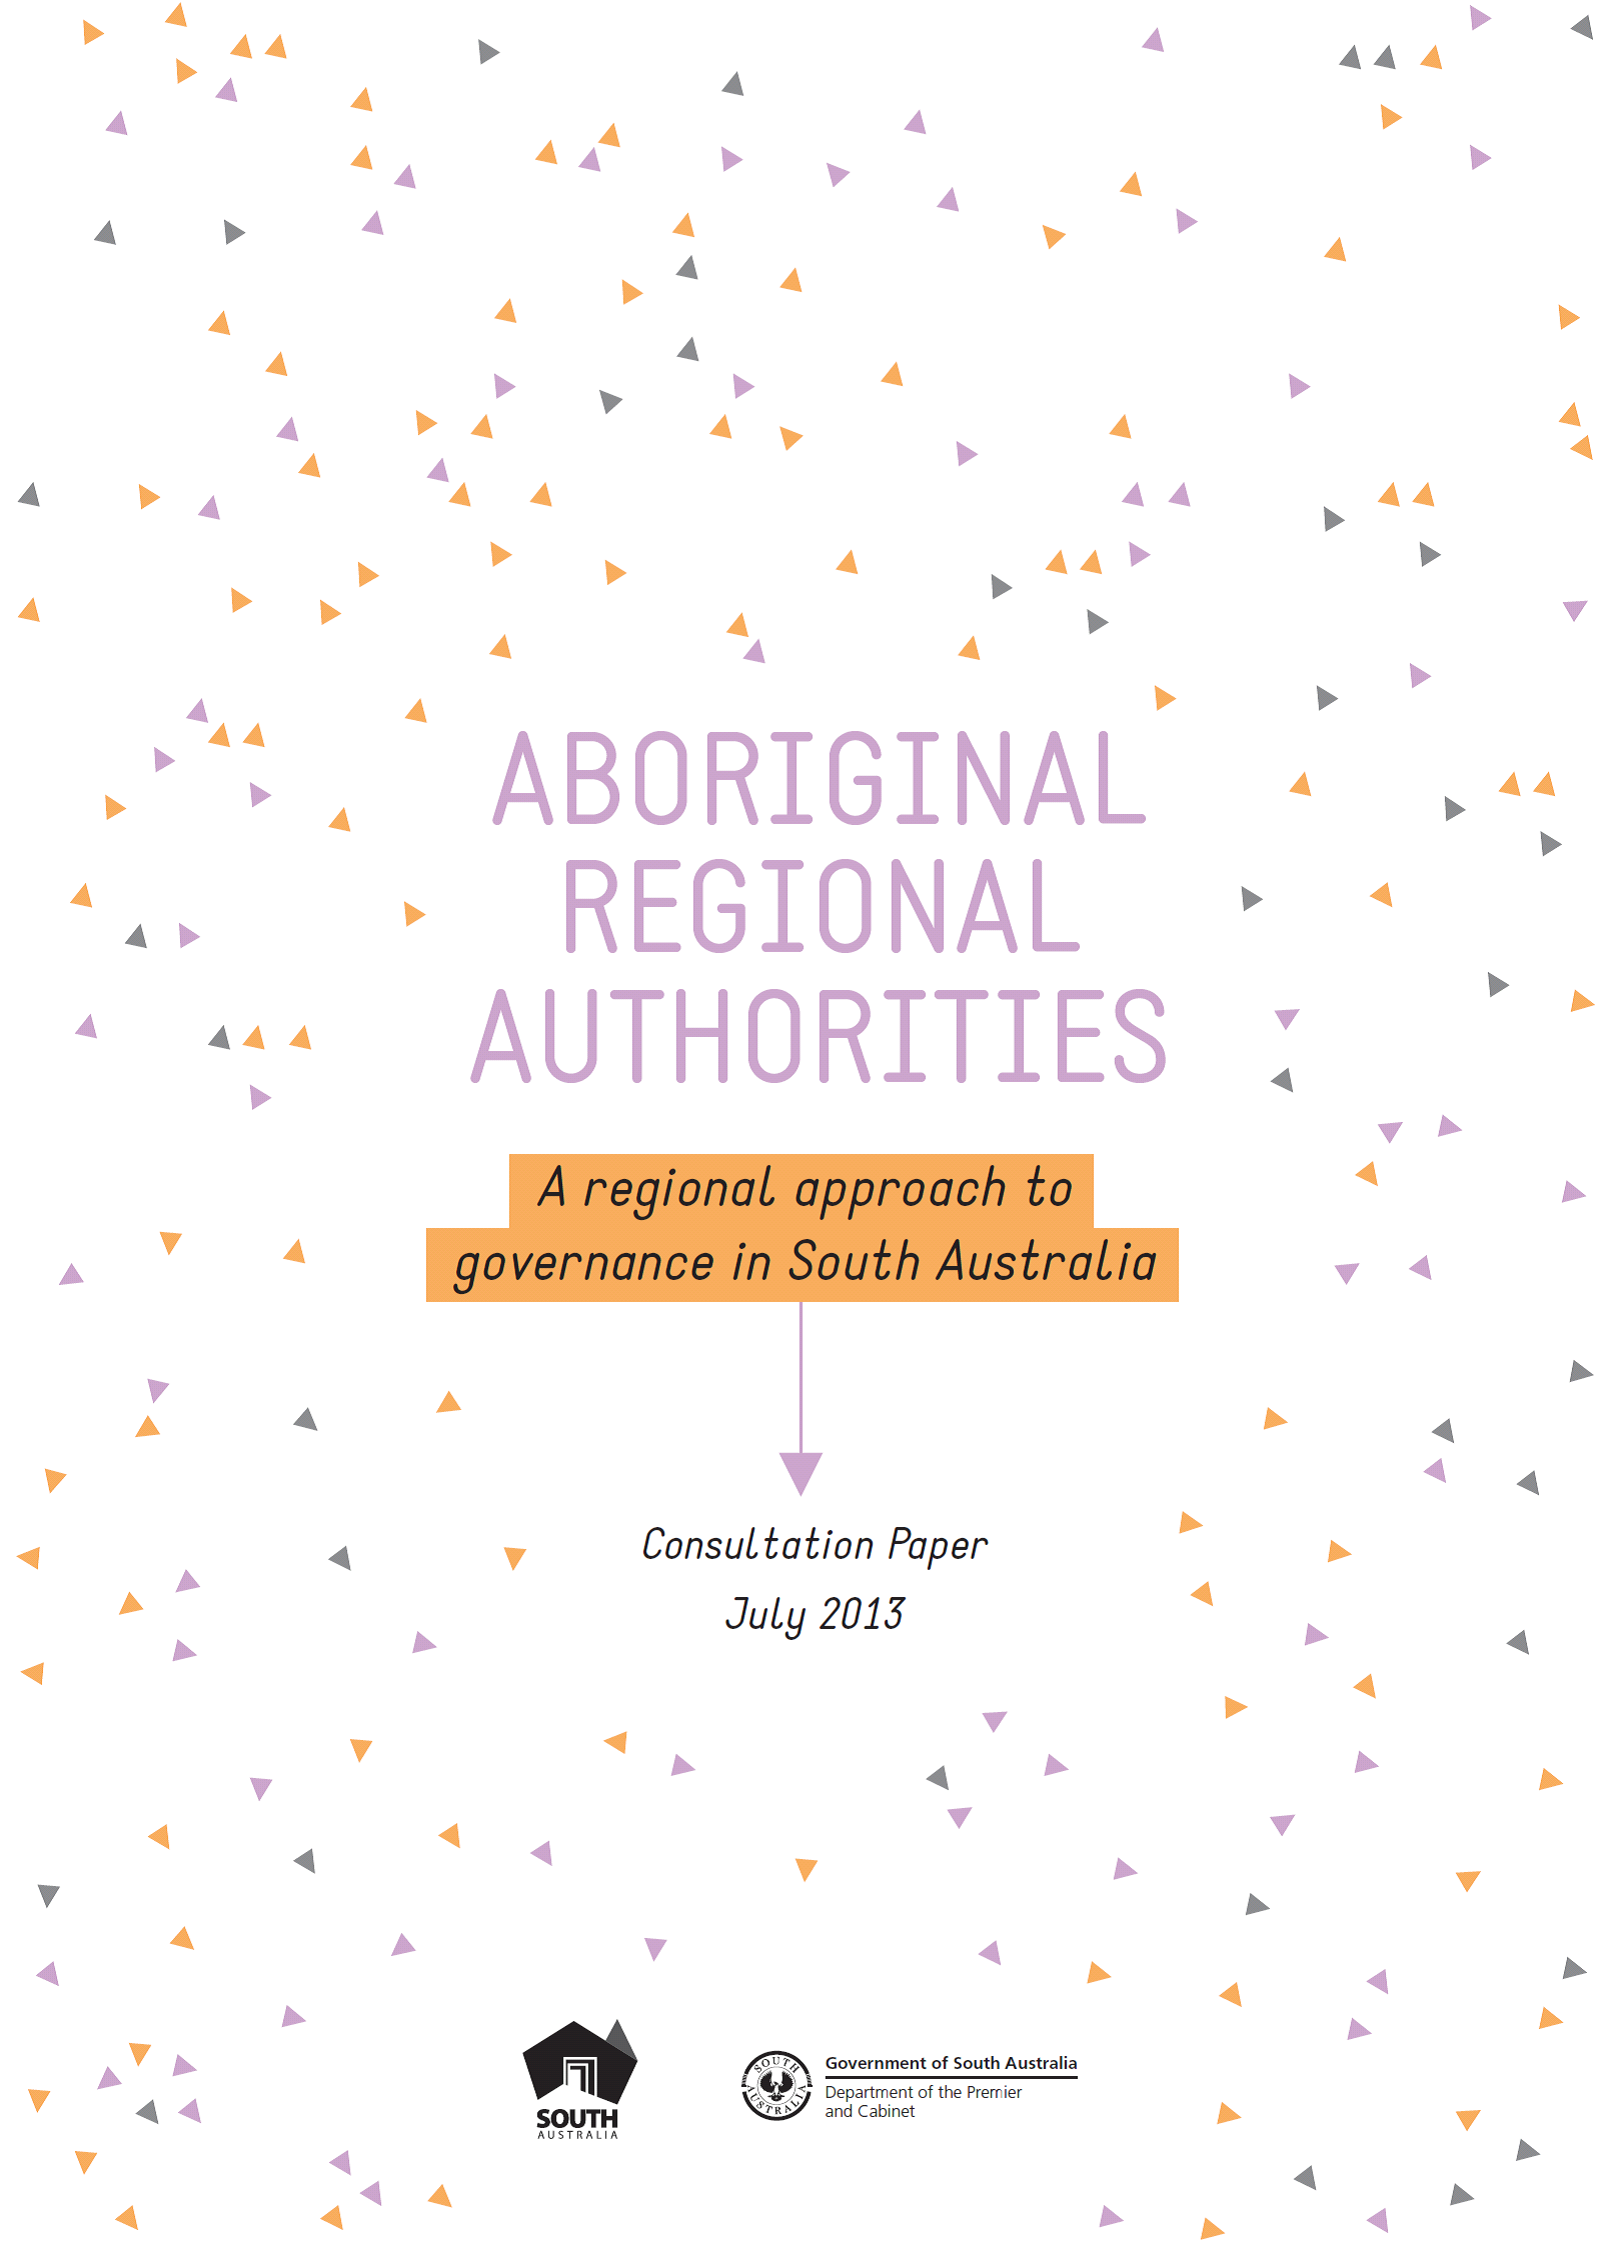 https://aigi.org.au/wp-content/uploads/2013/07/SA-Aboriginal-Regional-Authorities.png